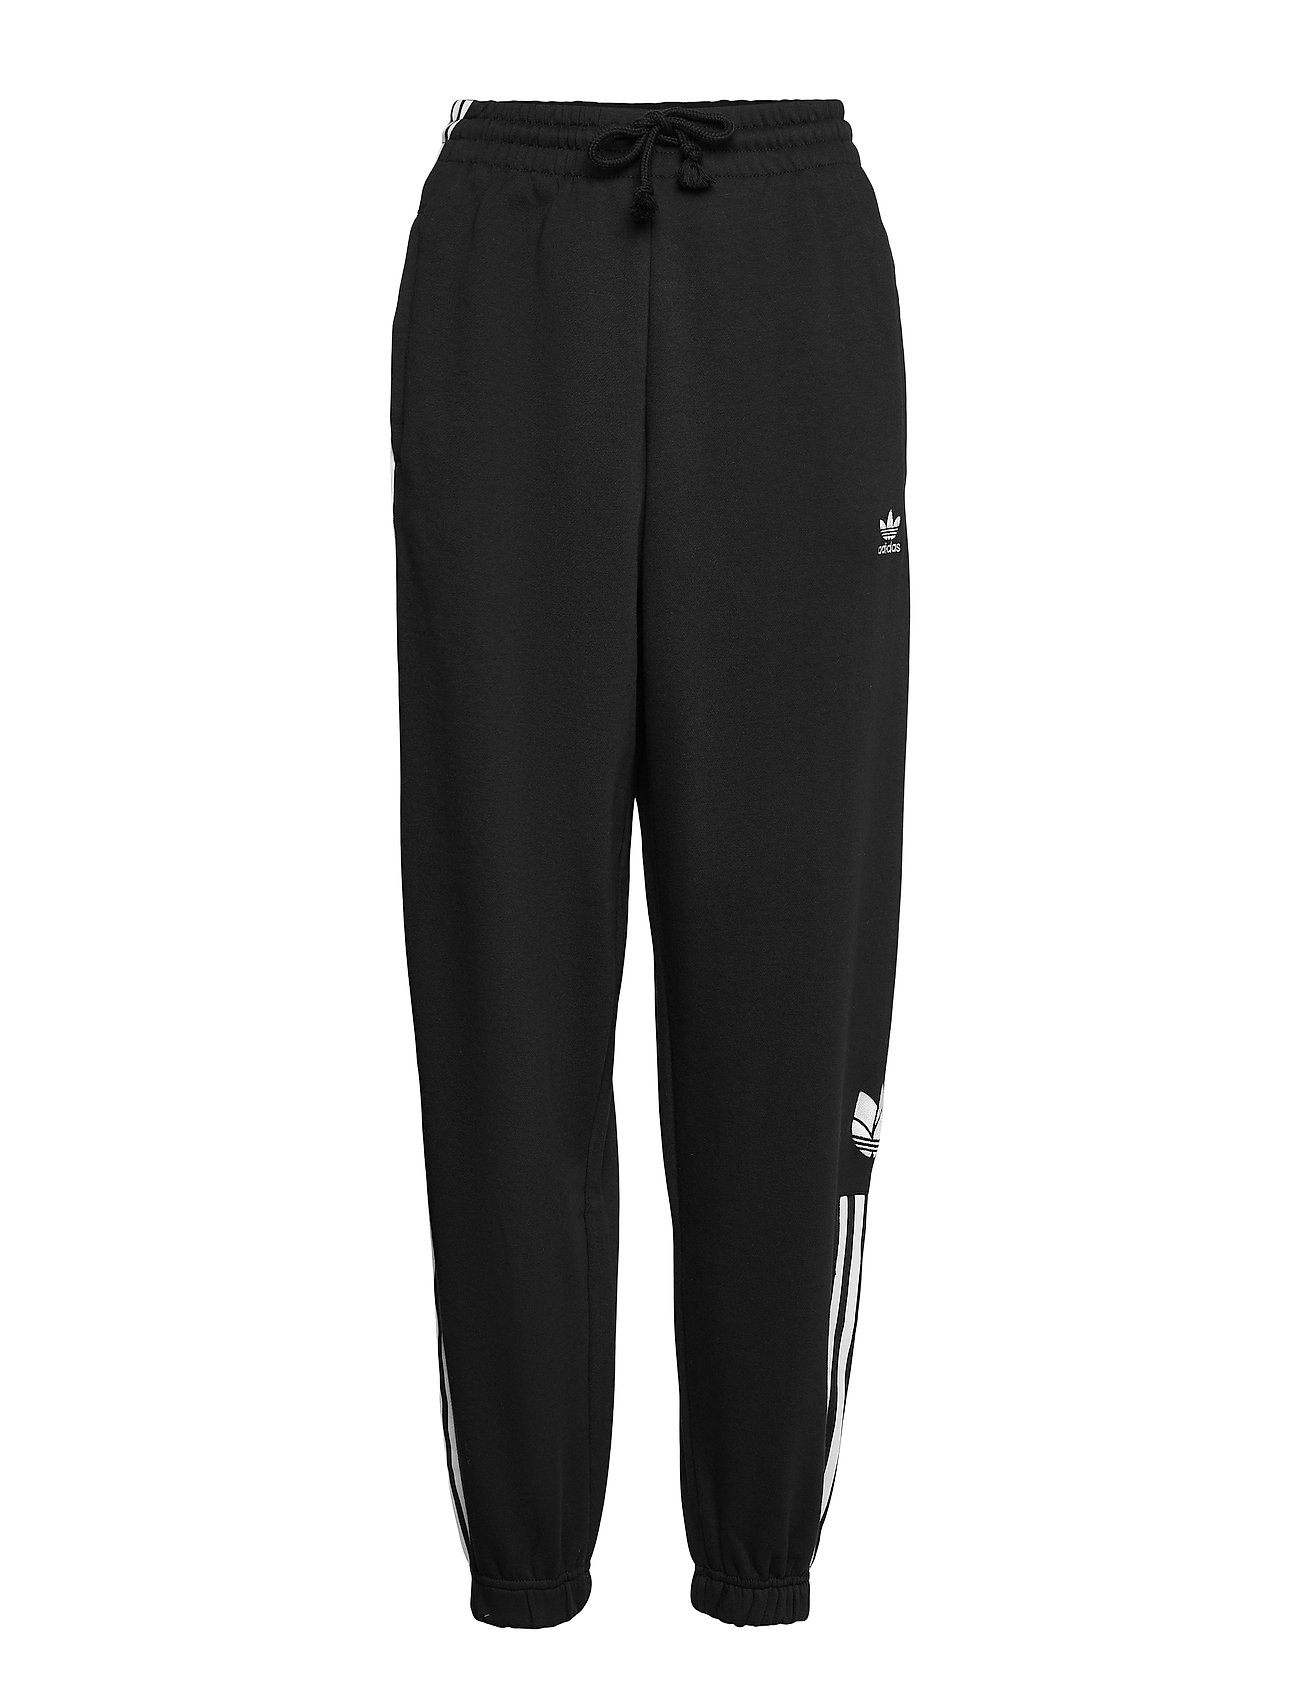 Adicolor 3d Trefoil Fleece Pants W Collegehousut Olohousut Musta Adidas Originals, adidas Originals